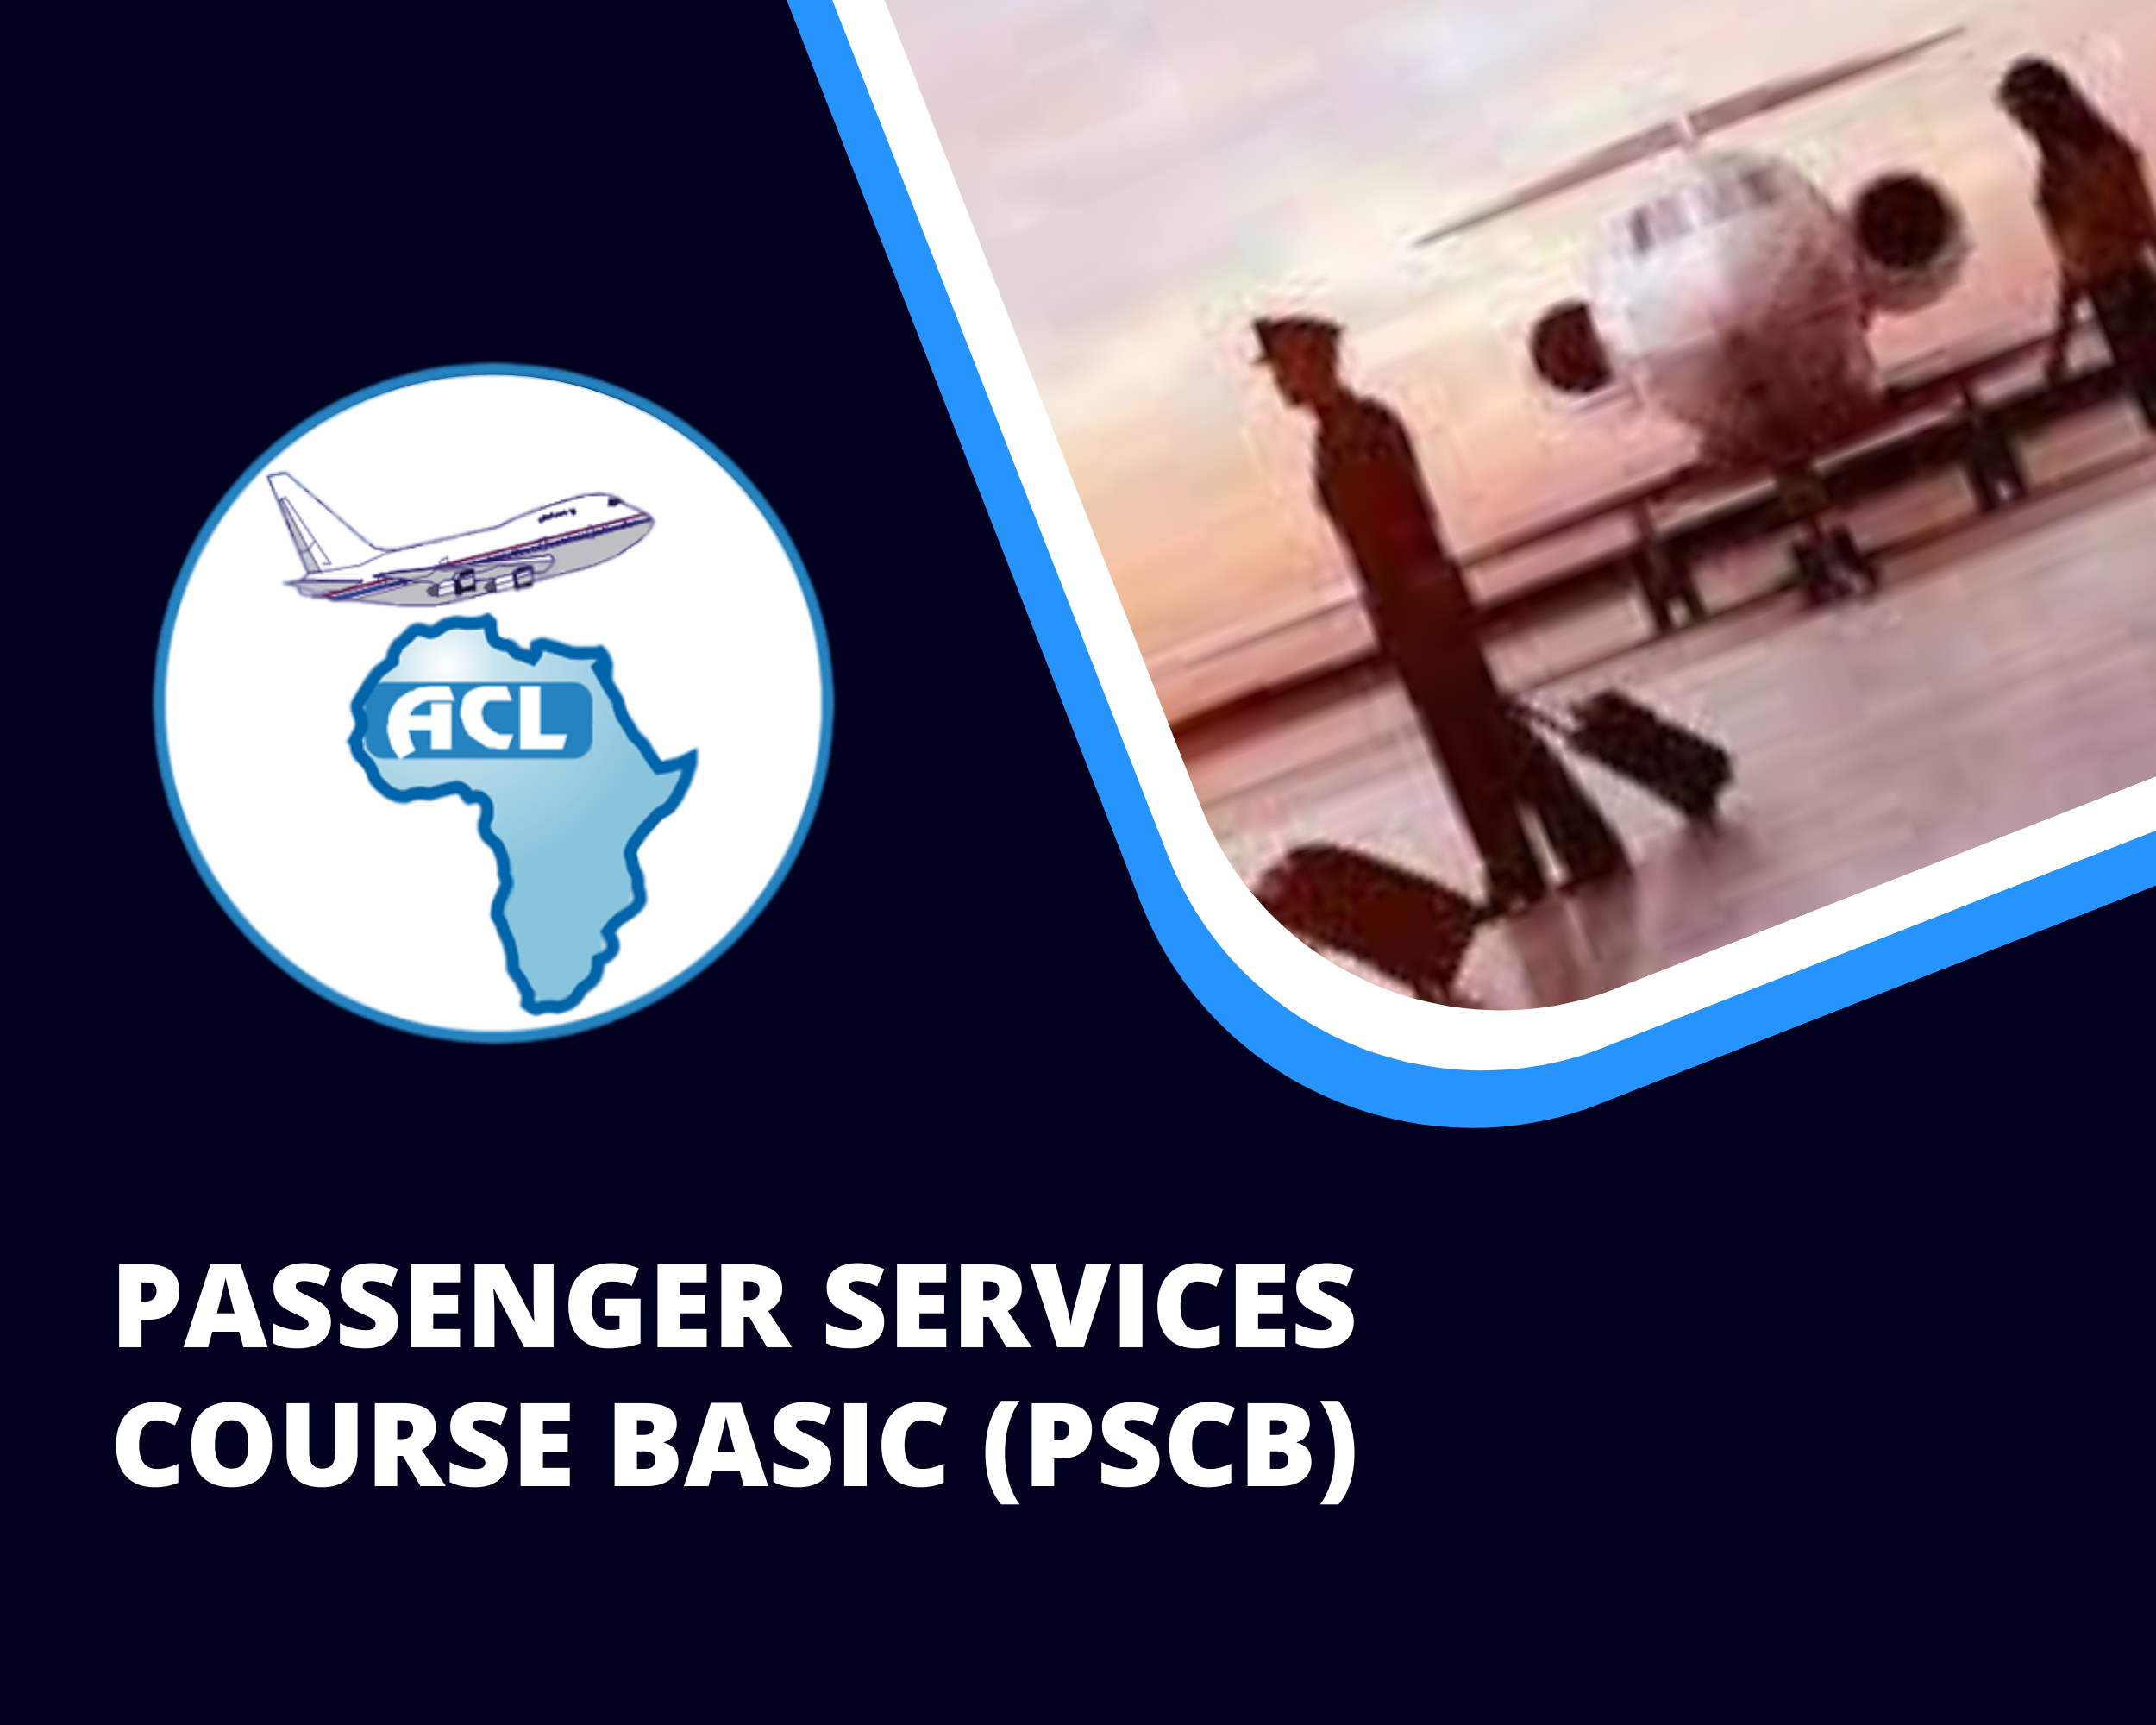 PASSENGER SERVICES COURSE BASIC (PSCB)